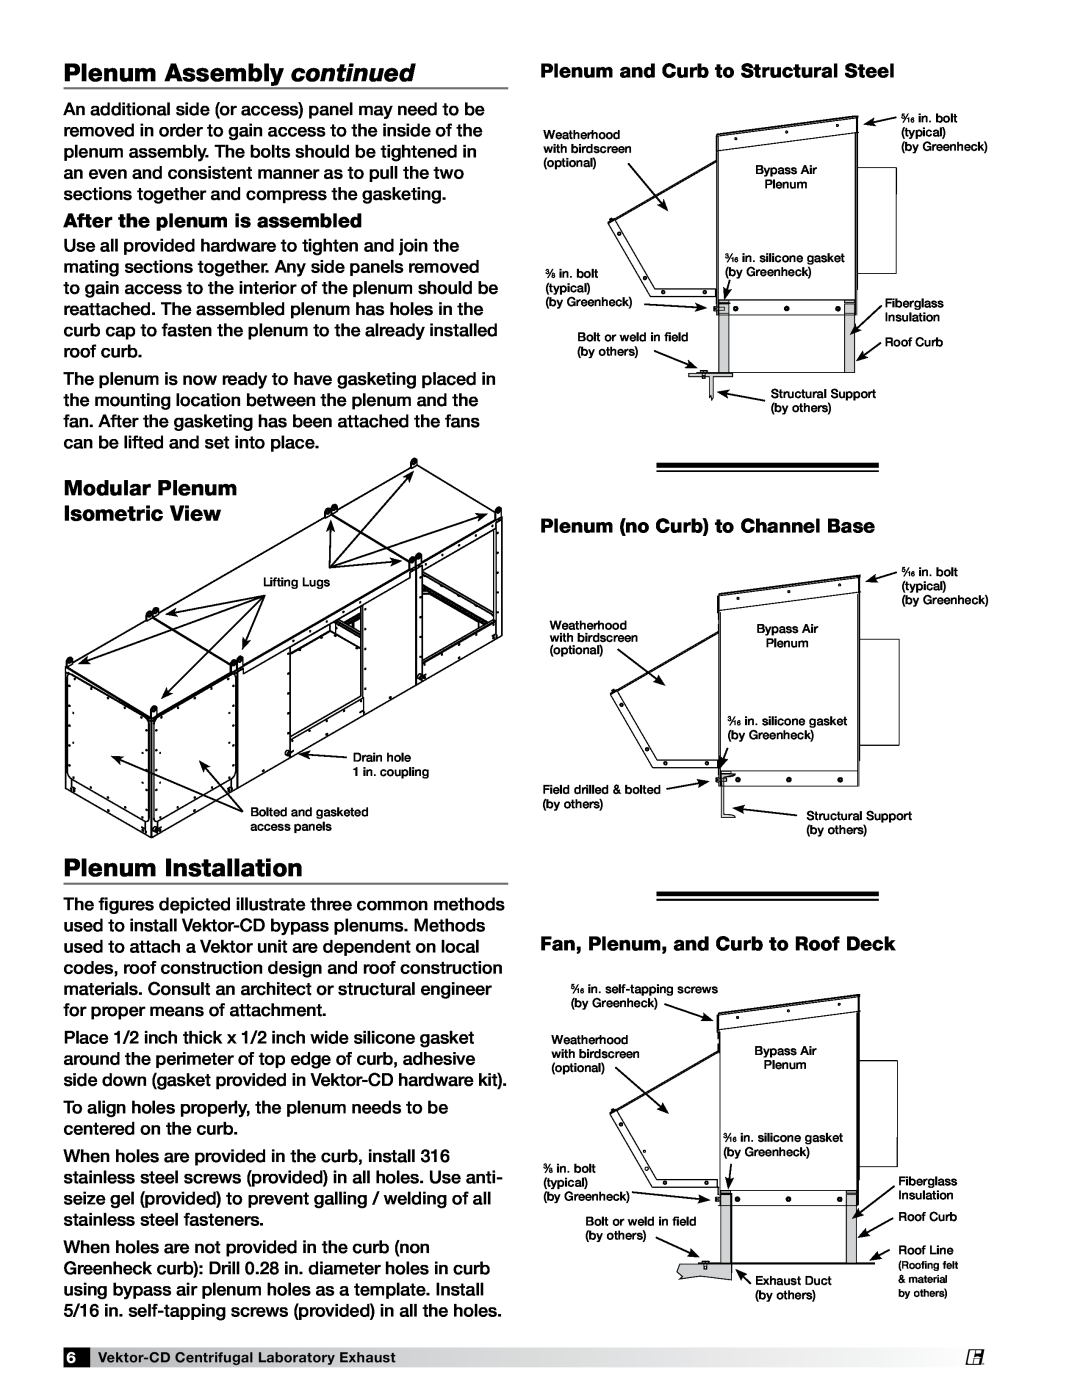 Greenheck Fan 47555 specifications Plenum Assembly continued, Plenum Installation, Modular Plenum Isometric View 